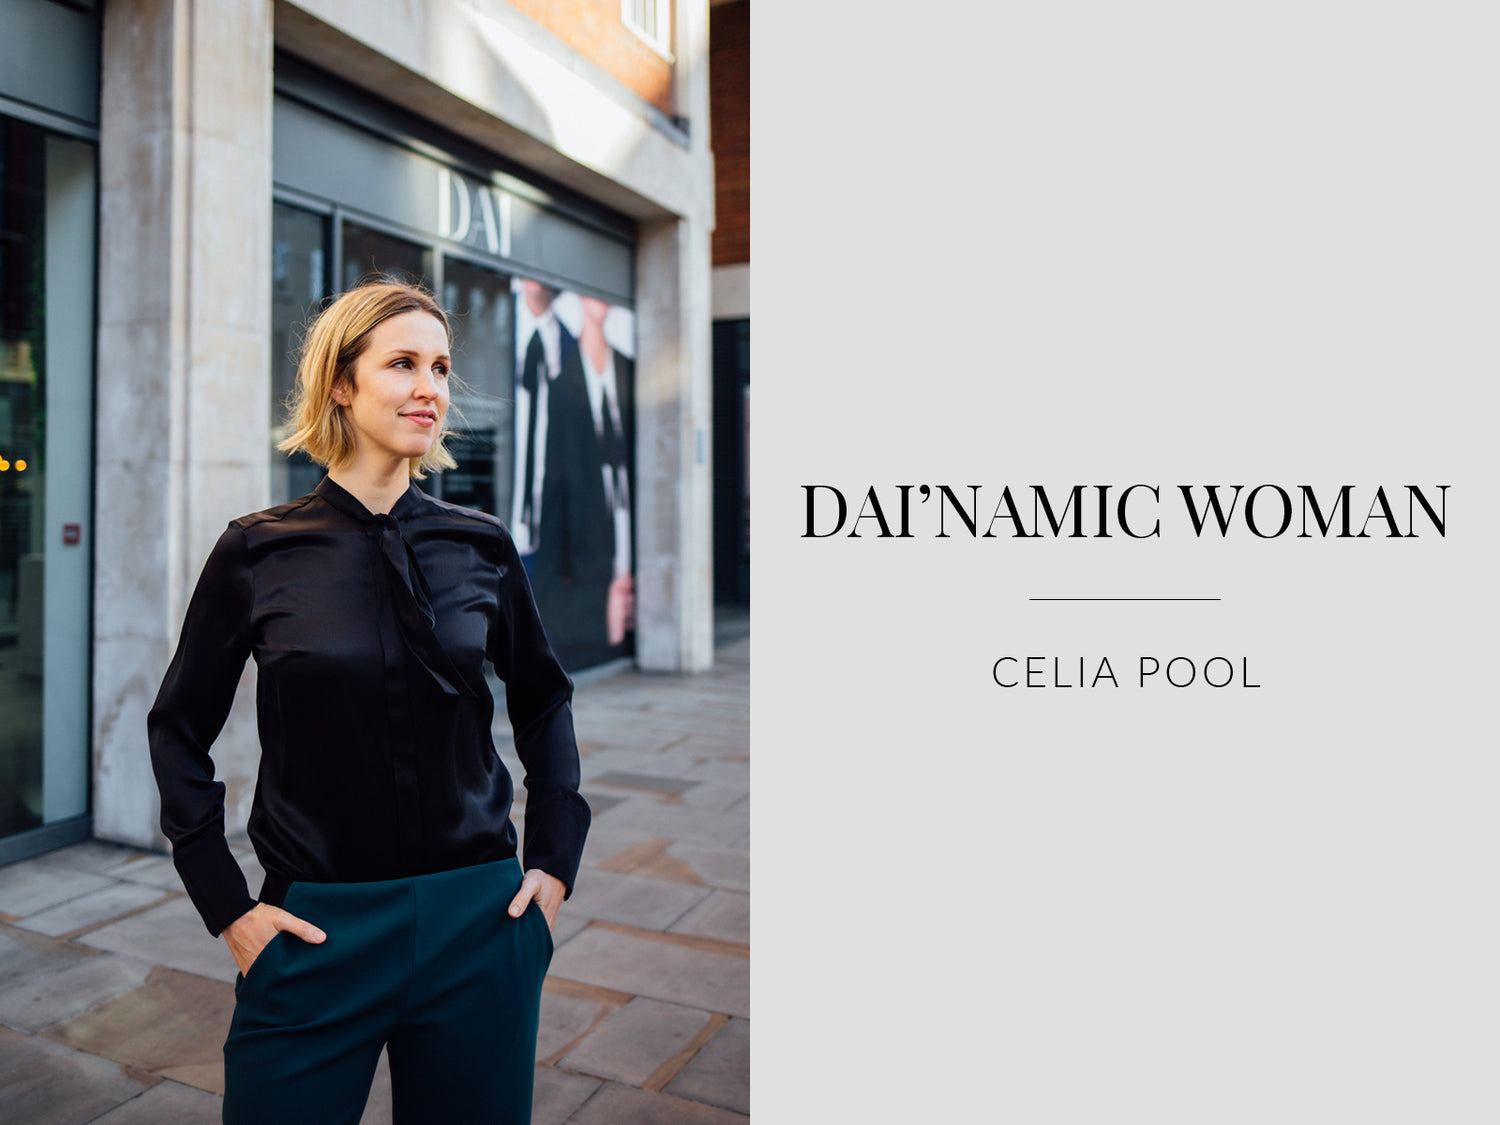 Dai'namic Woman: Celia Pool